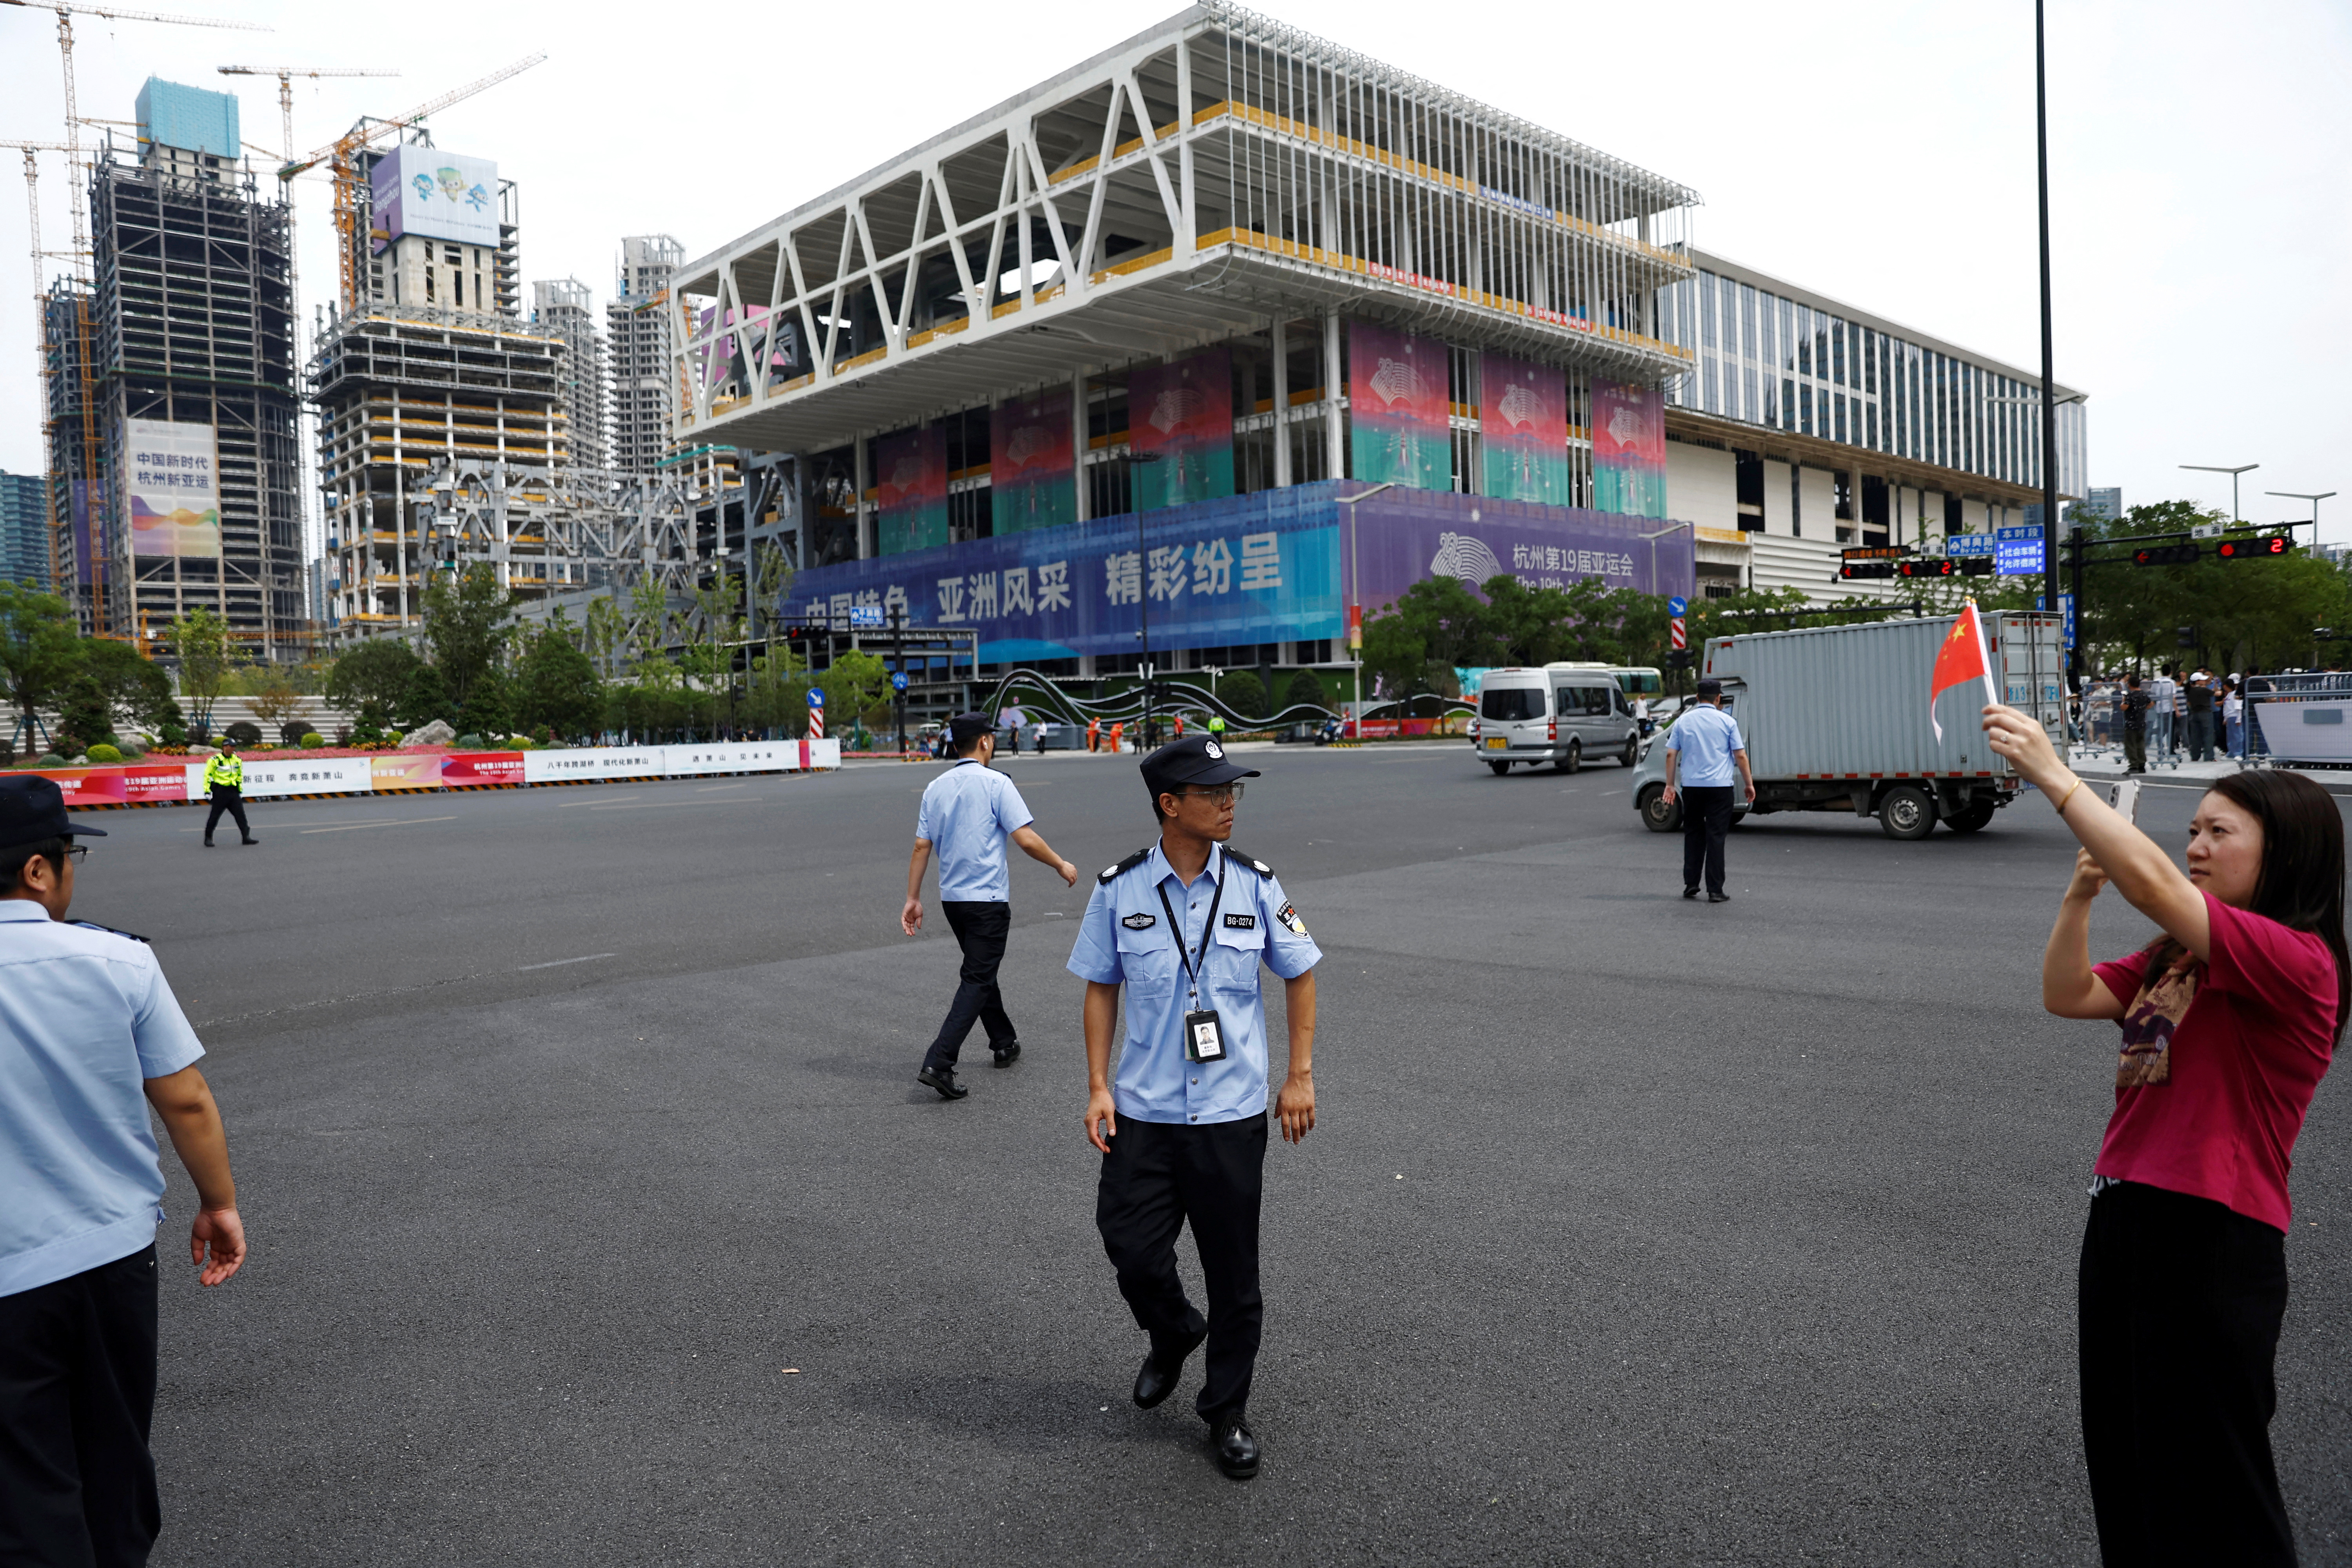 Asian Games: China's Liren starts favourite - News Today